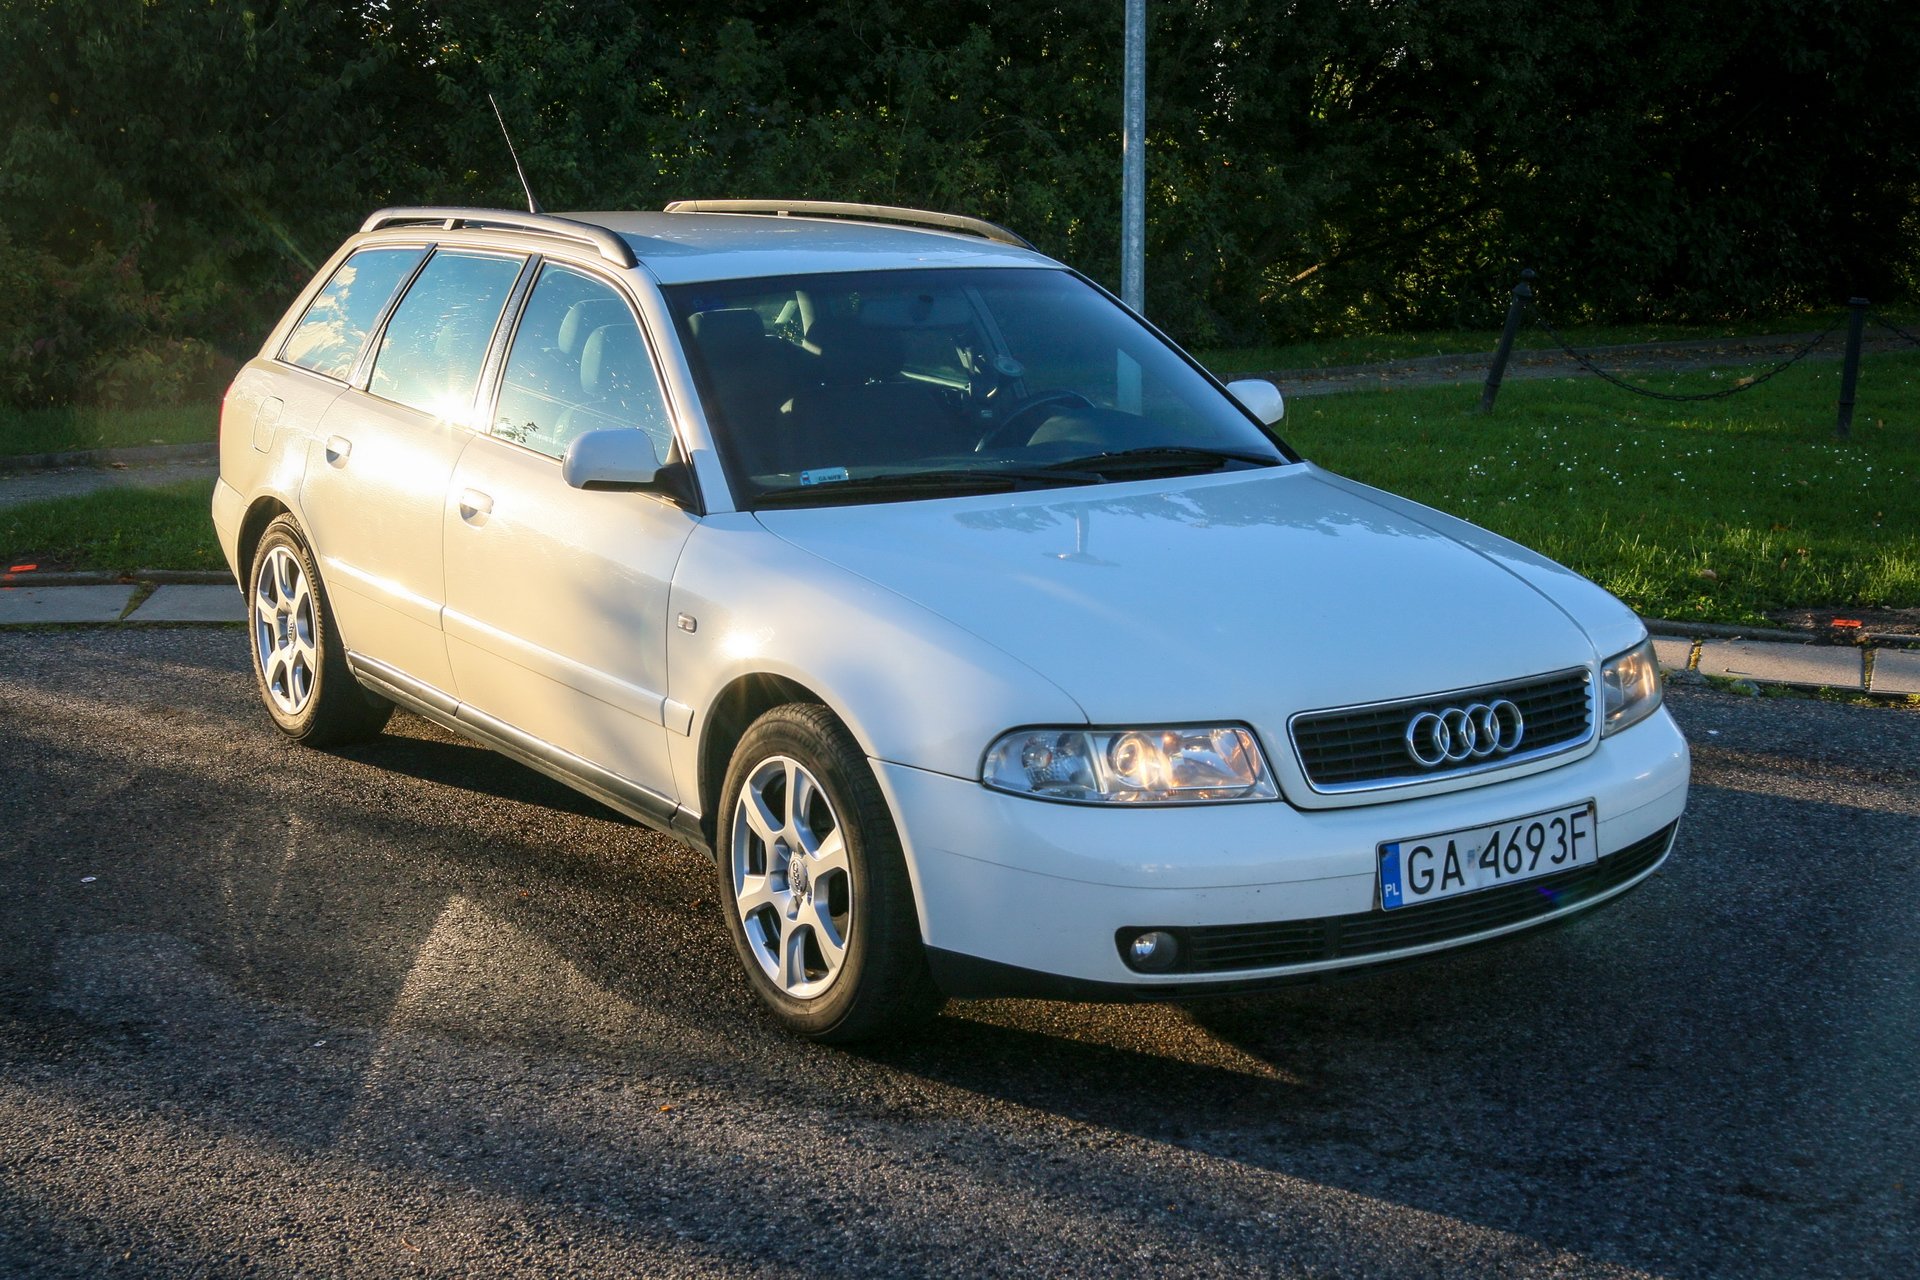 File:Audi A4 B5 Avant front 20080517.jpg - Wikipedia